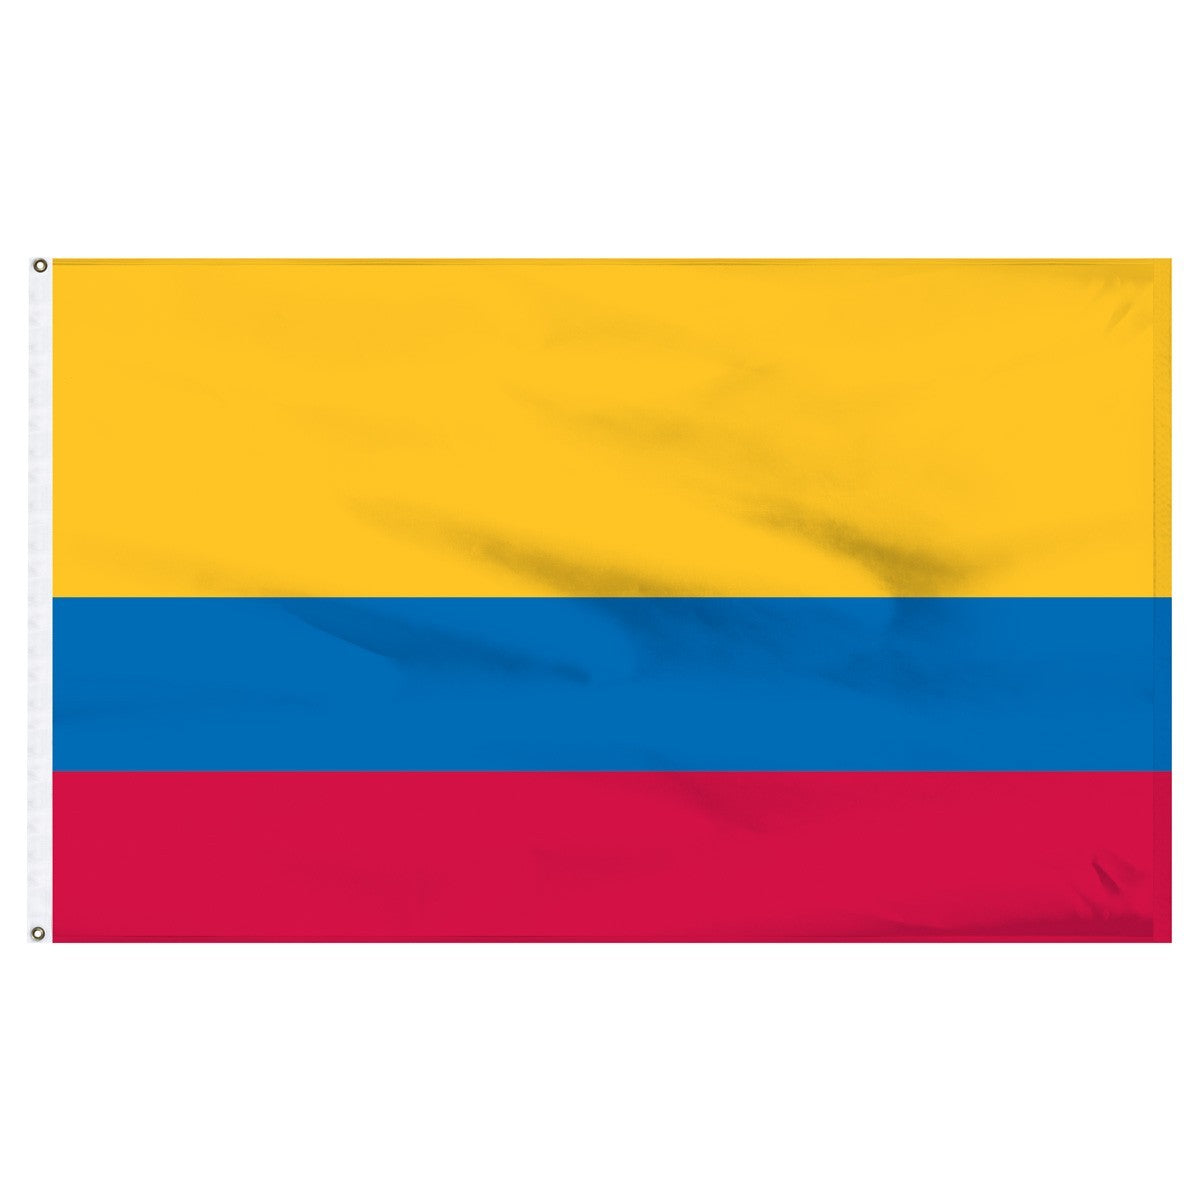 Colombia 2' x 3' Outdoor Nylon Flag